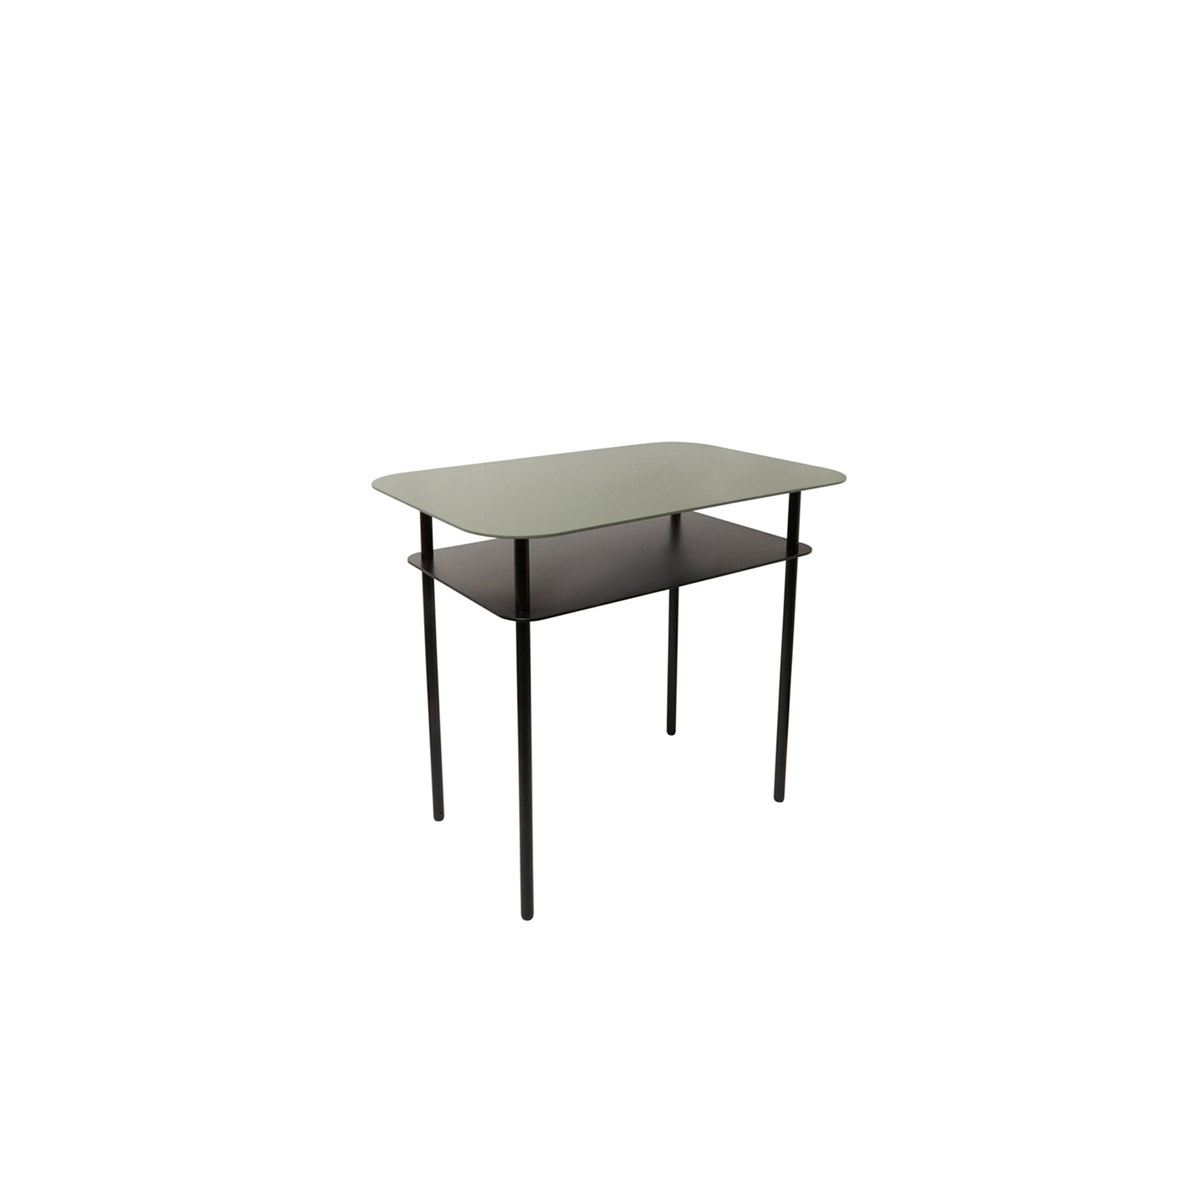 Side table Kara, Pistachio - L60 x L40 x H55 cm - Raw steel Powder coated - image 1